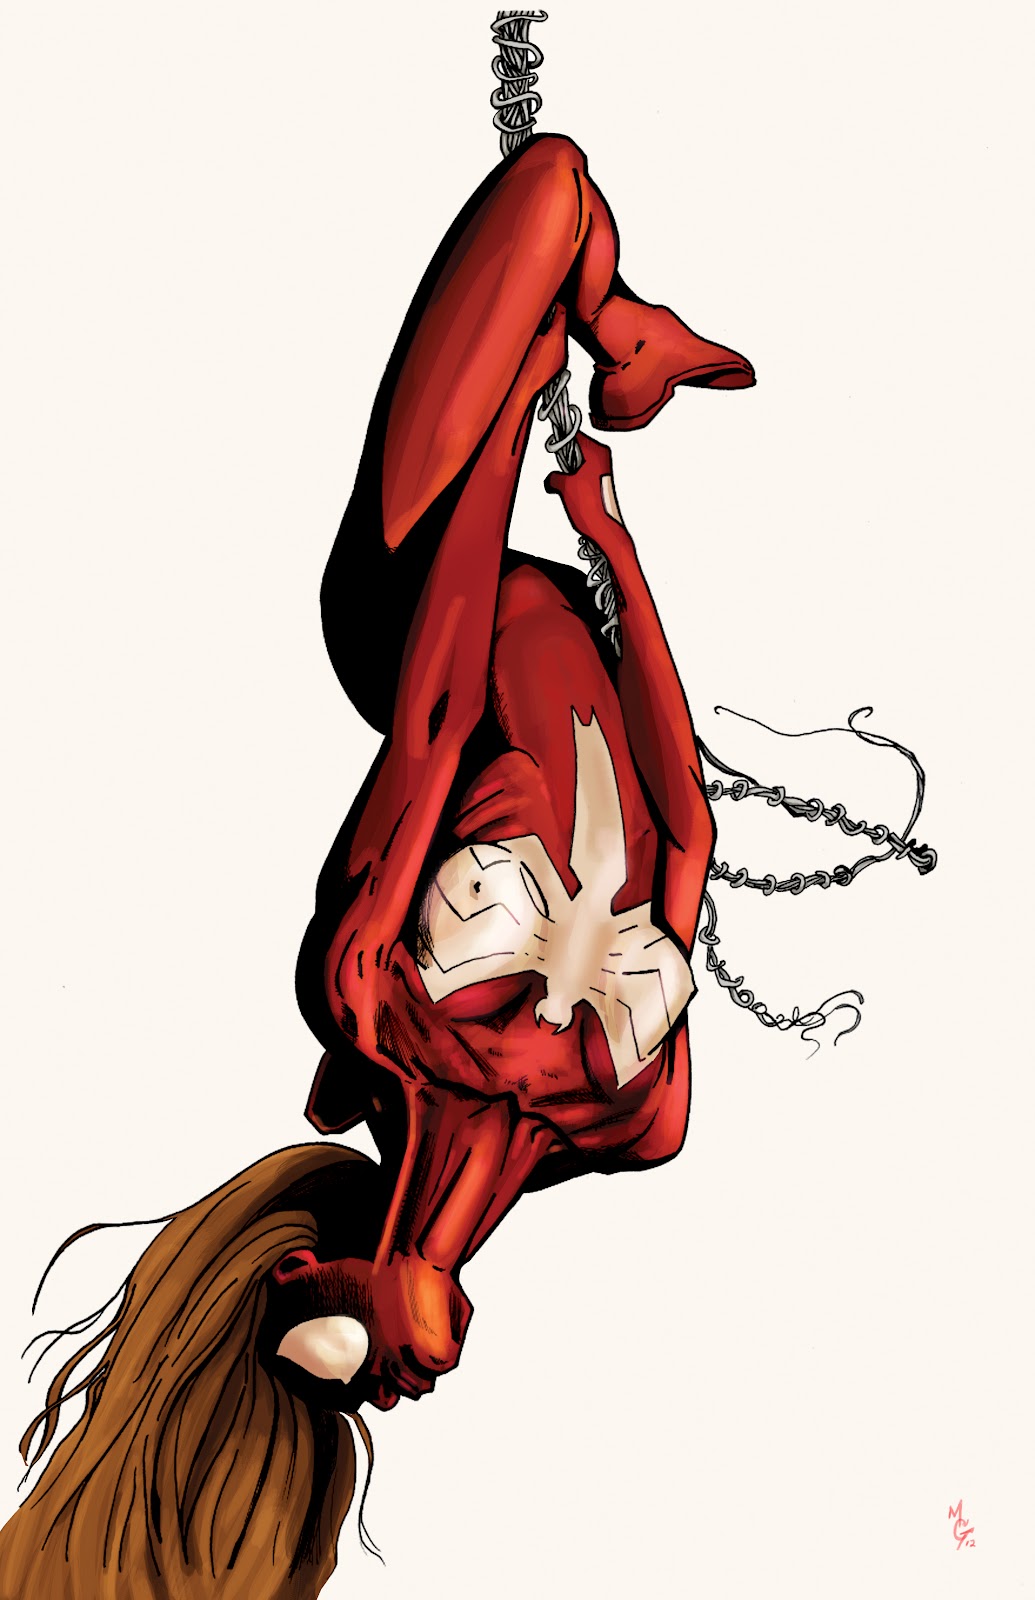 Spider-Woman #4